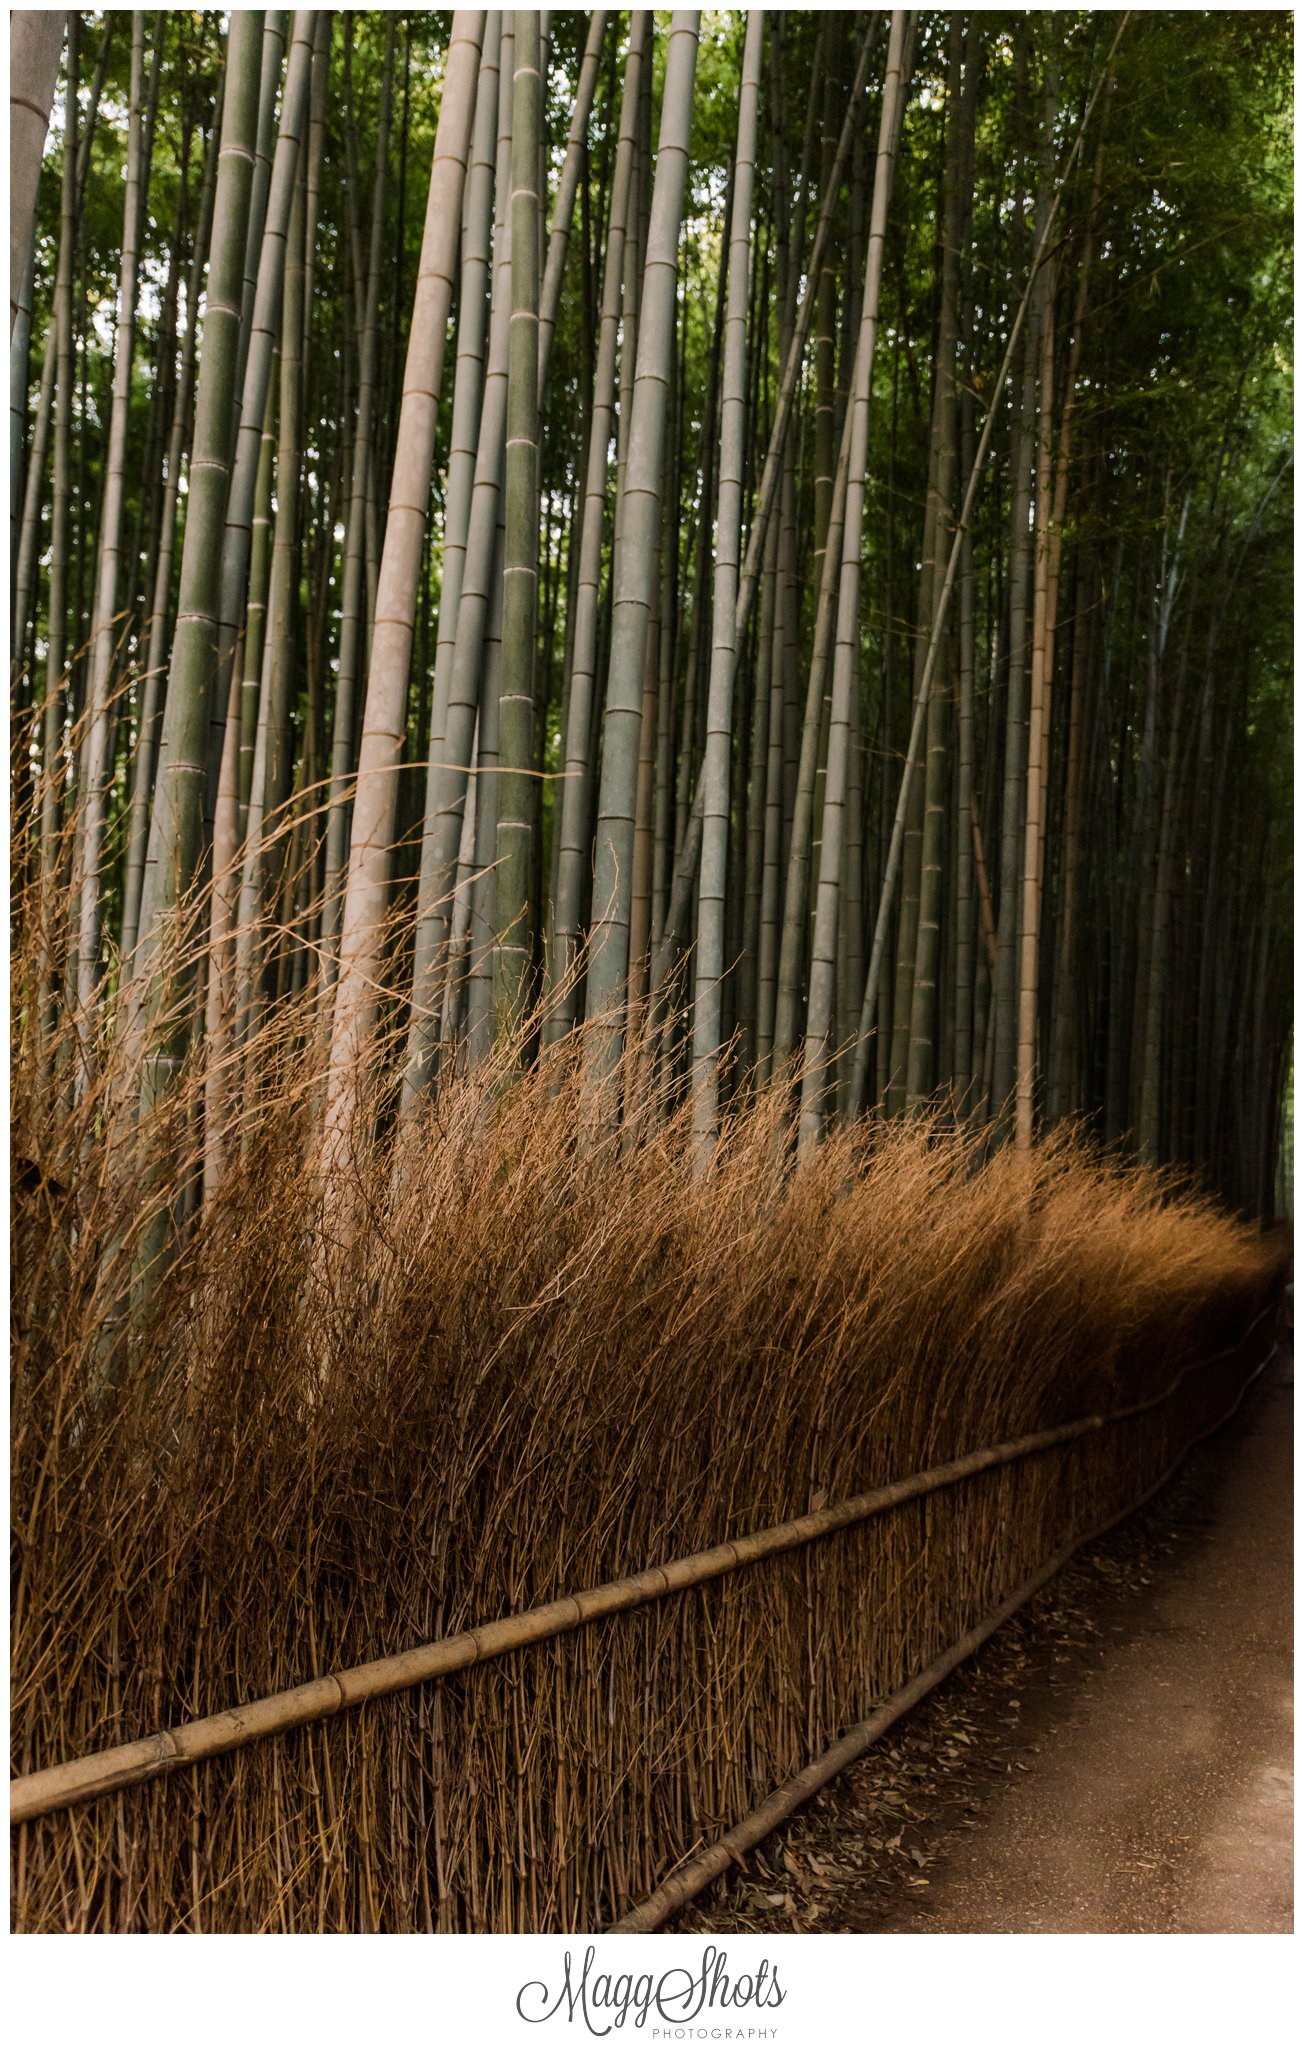 Japan, Japan travel, Japan Photographer, tokyo photographer, osaka, nagano, snow monkeys, kyoto, bamboo forest, golden castle